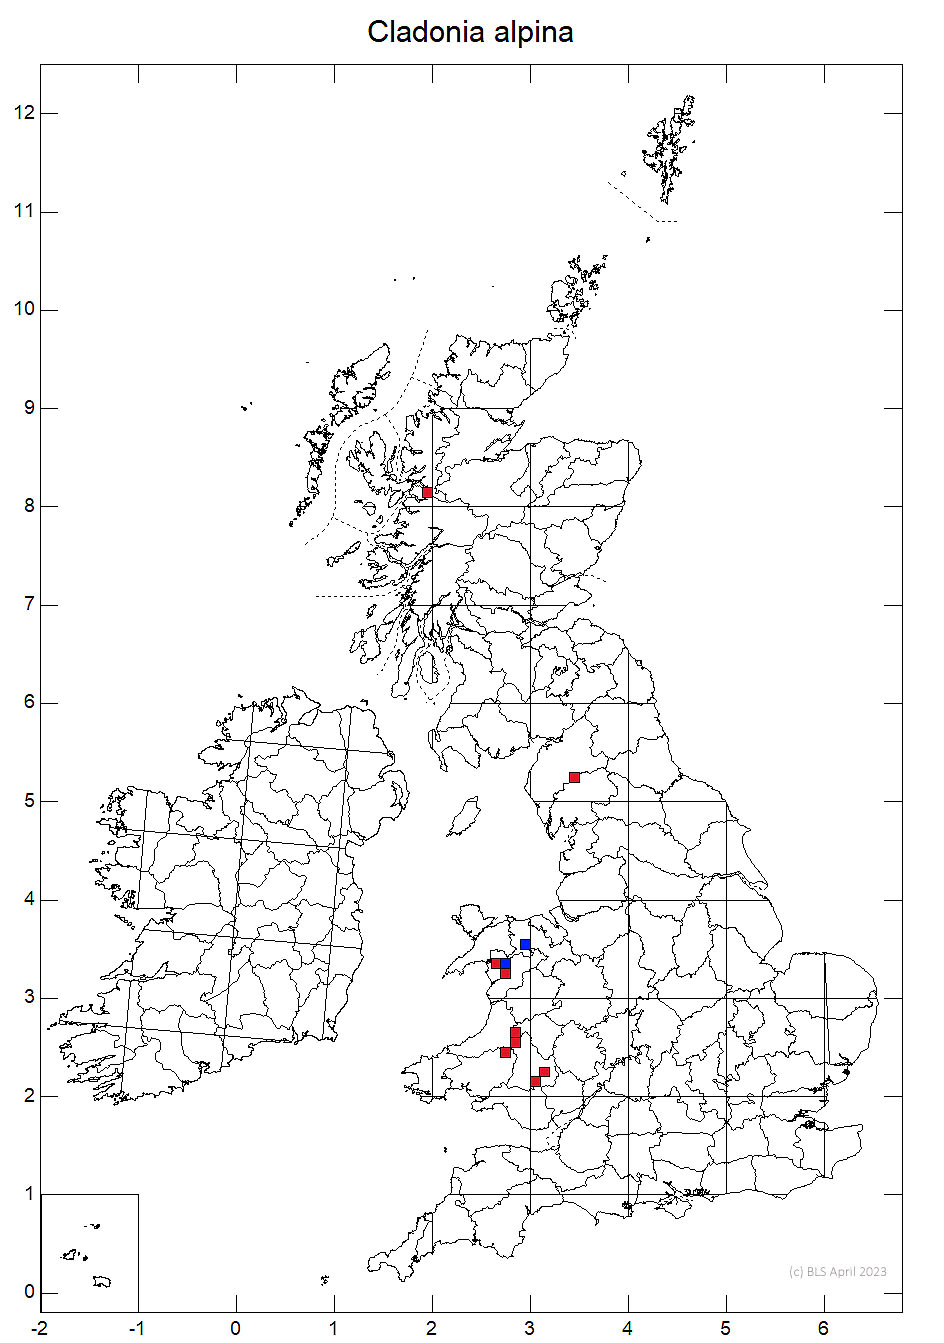 Cladonia alpina 10km sq distribution map